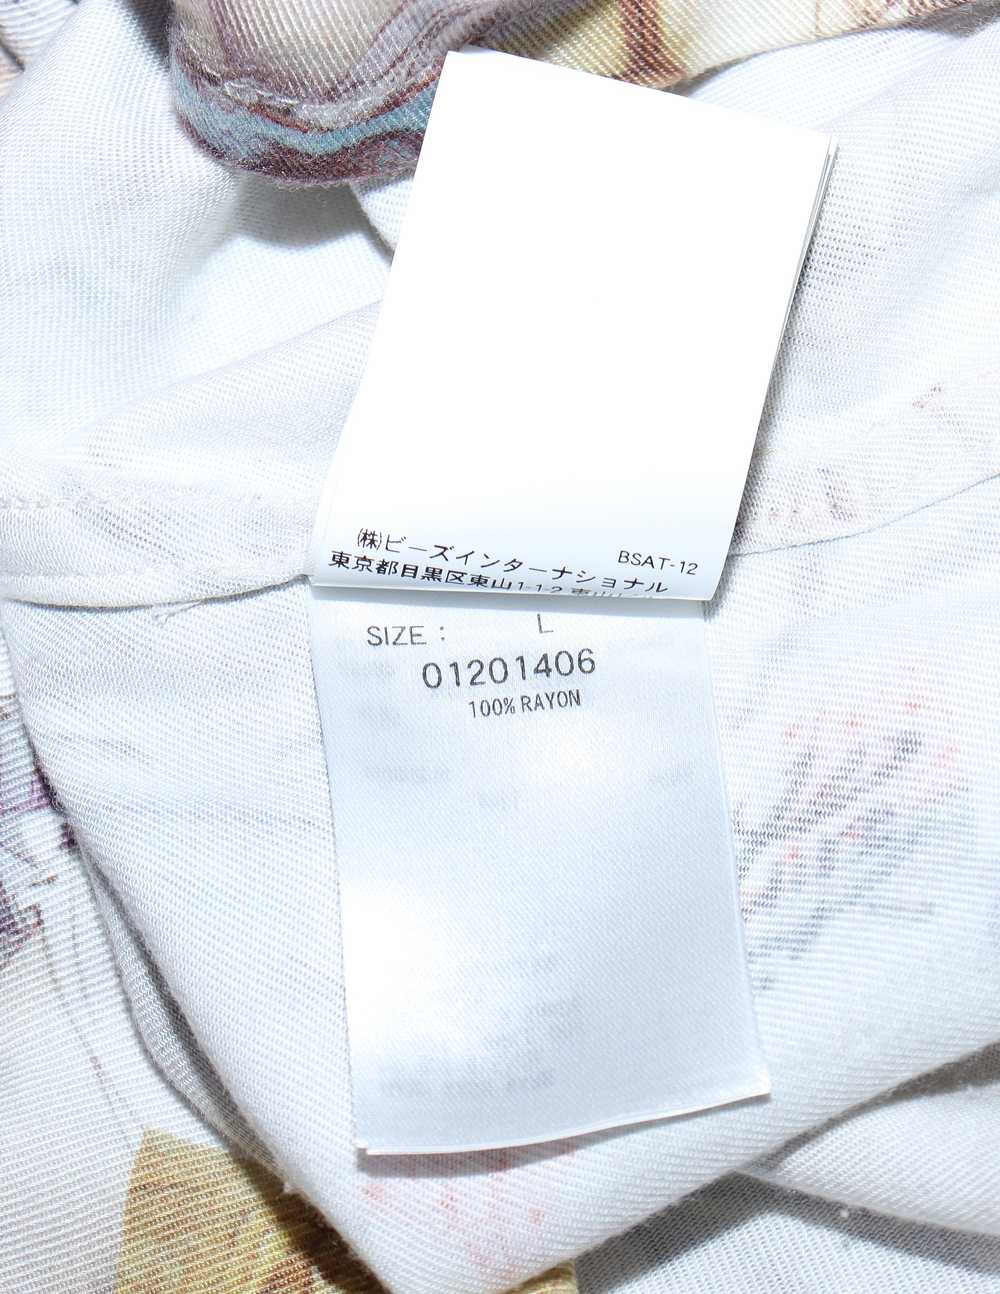 X-Large Sorayama 'Erotica' Rayon Shirt - image 11